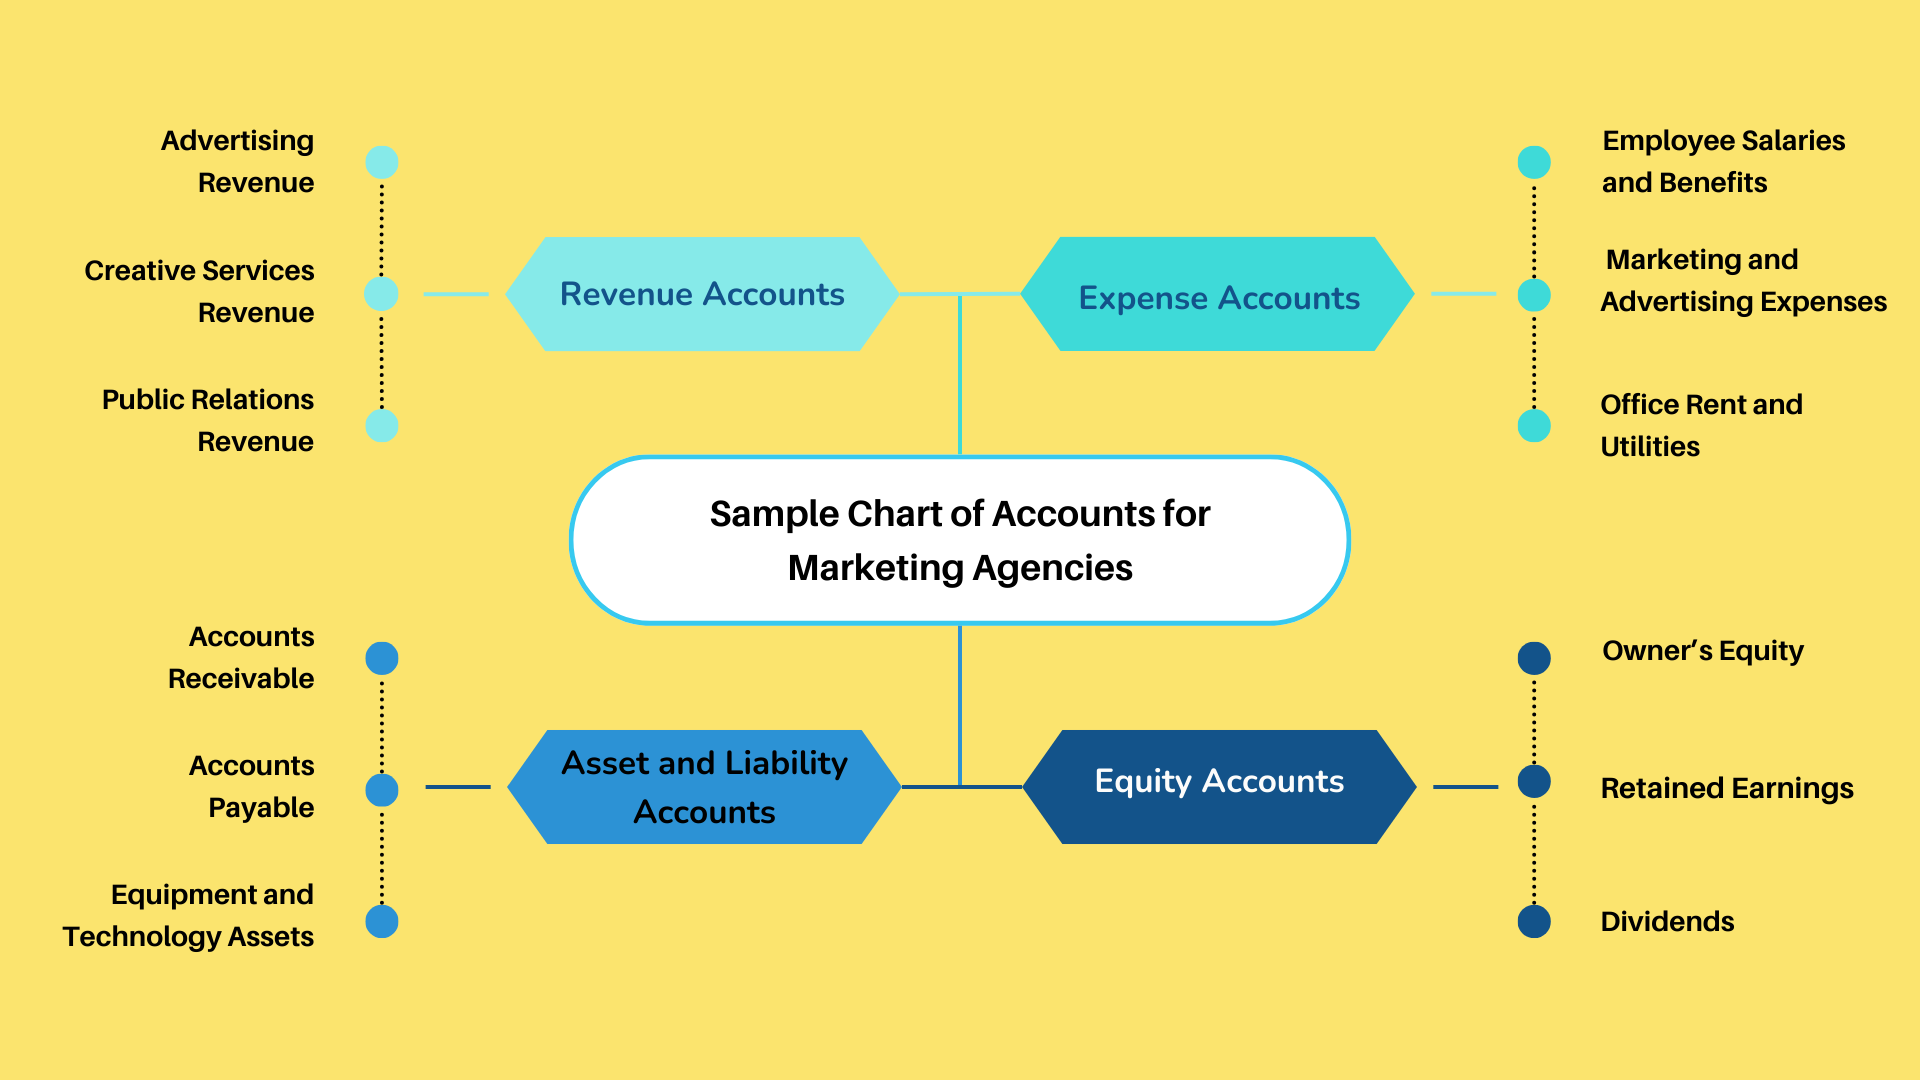 Sample Chart of Accounts for Marketing Agencies